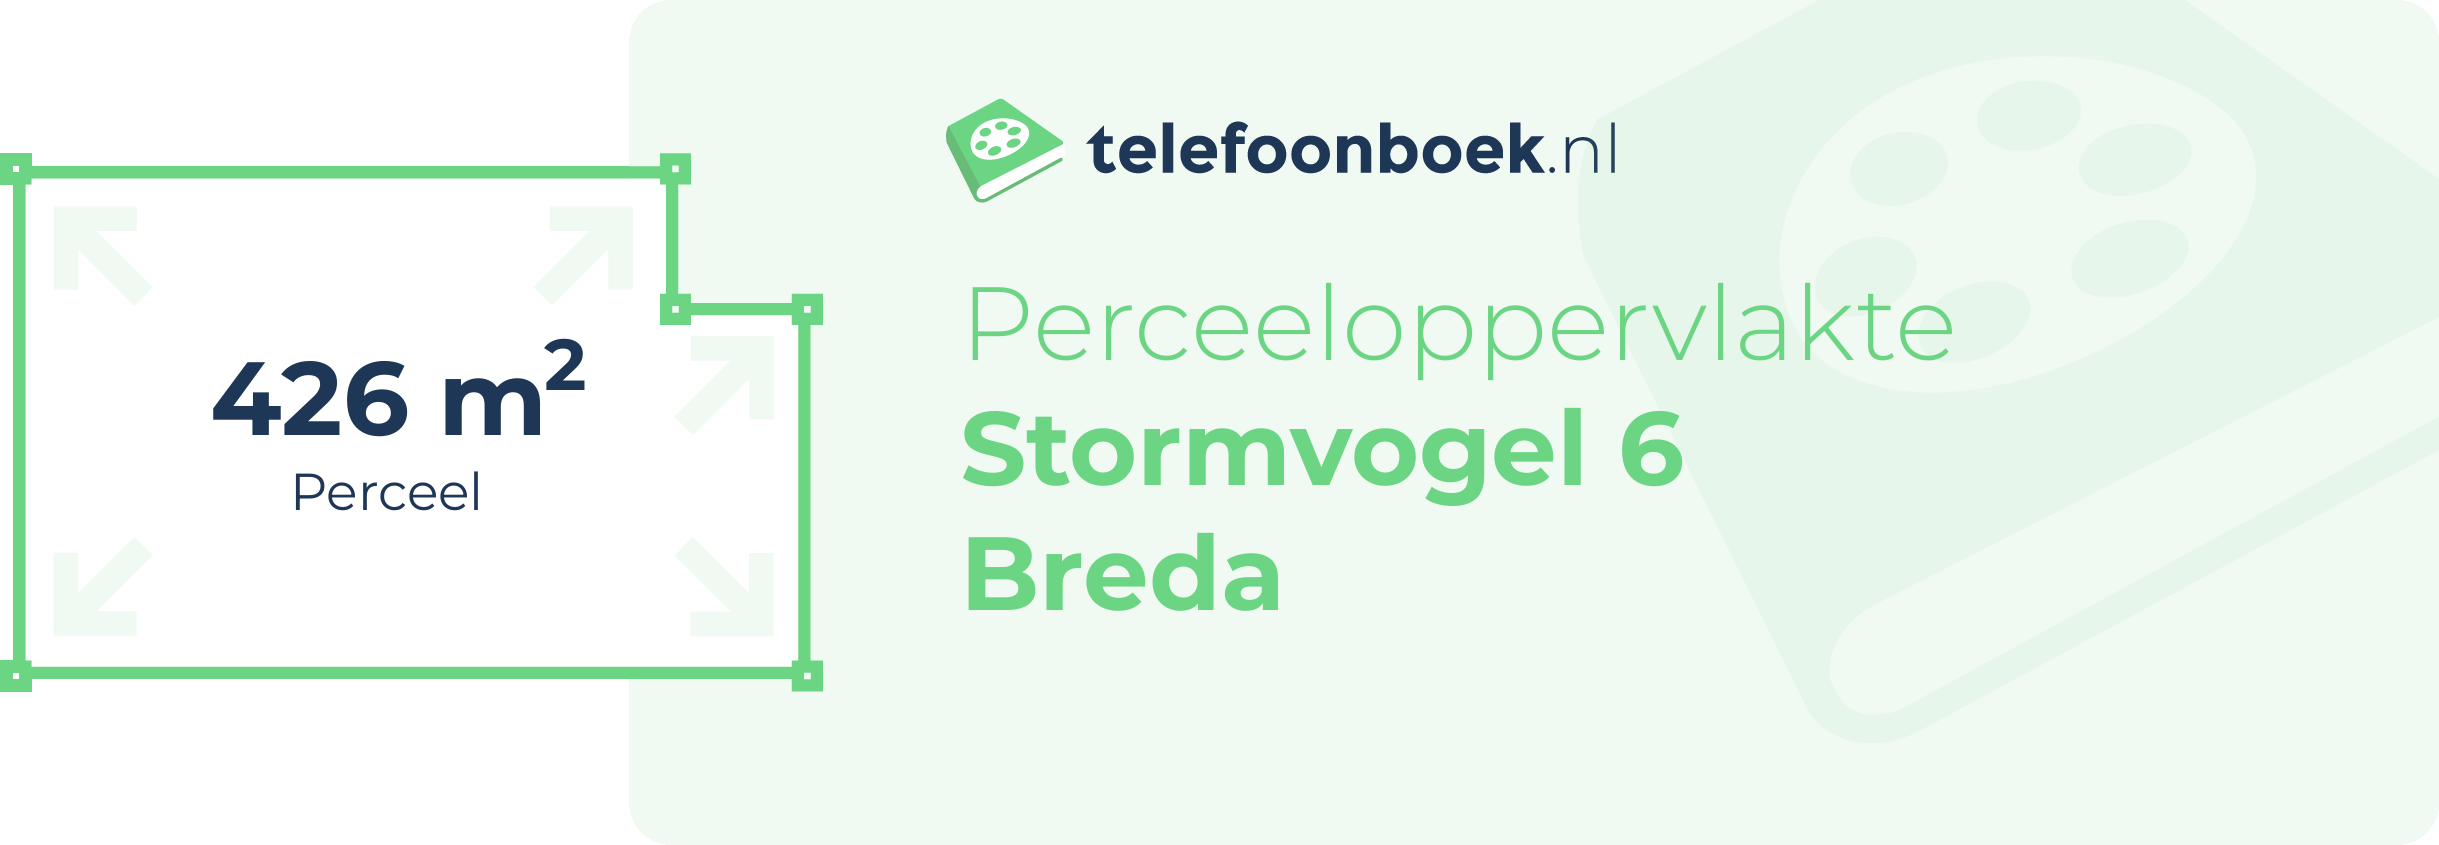 Perceeloppervlakte Stormvogel 6 Breda